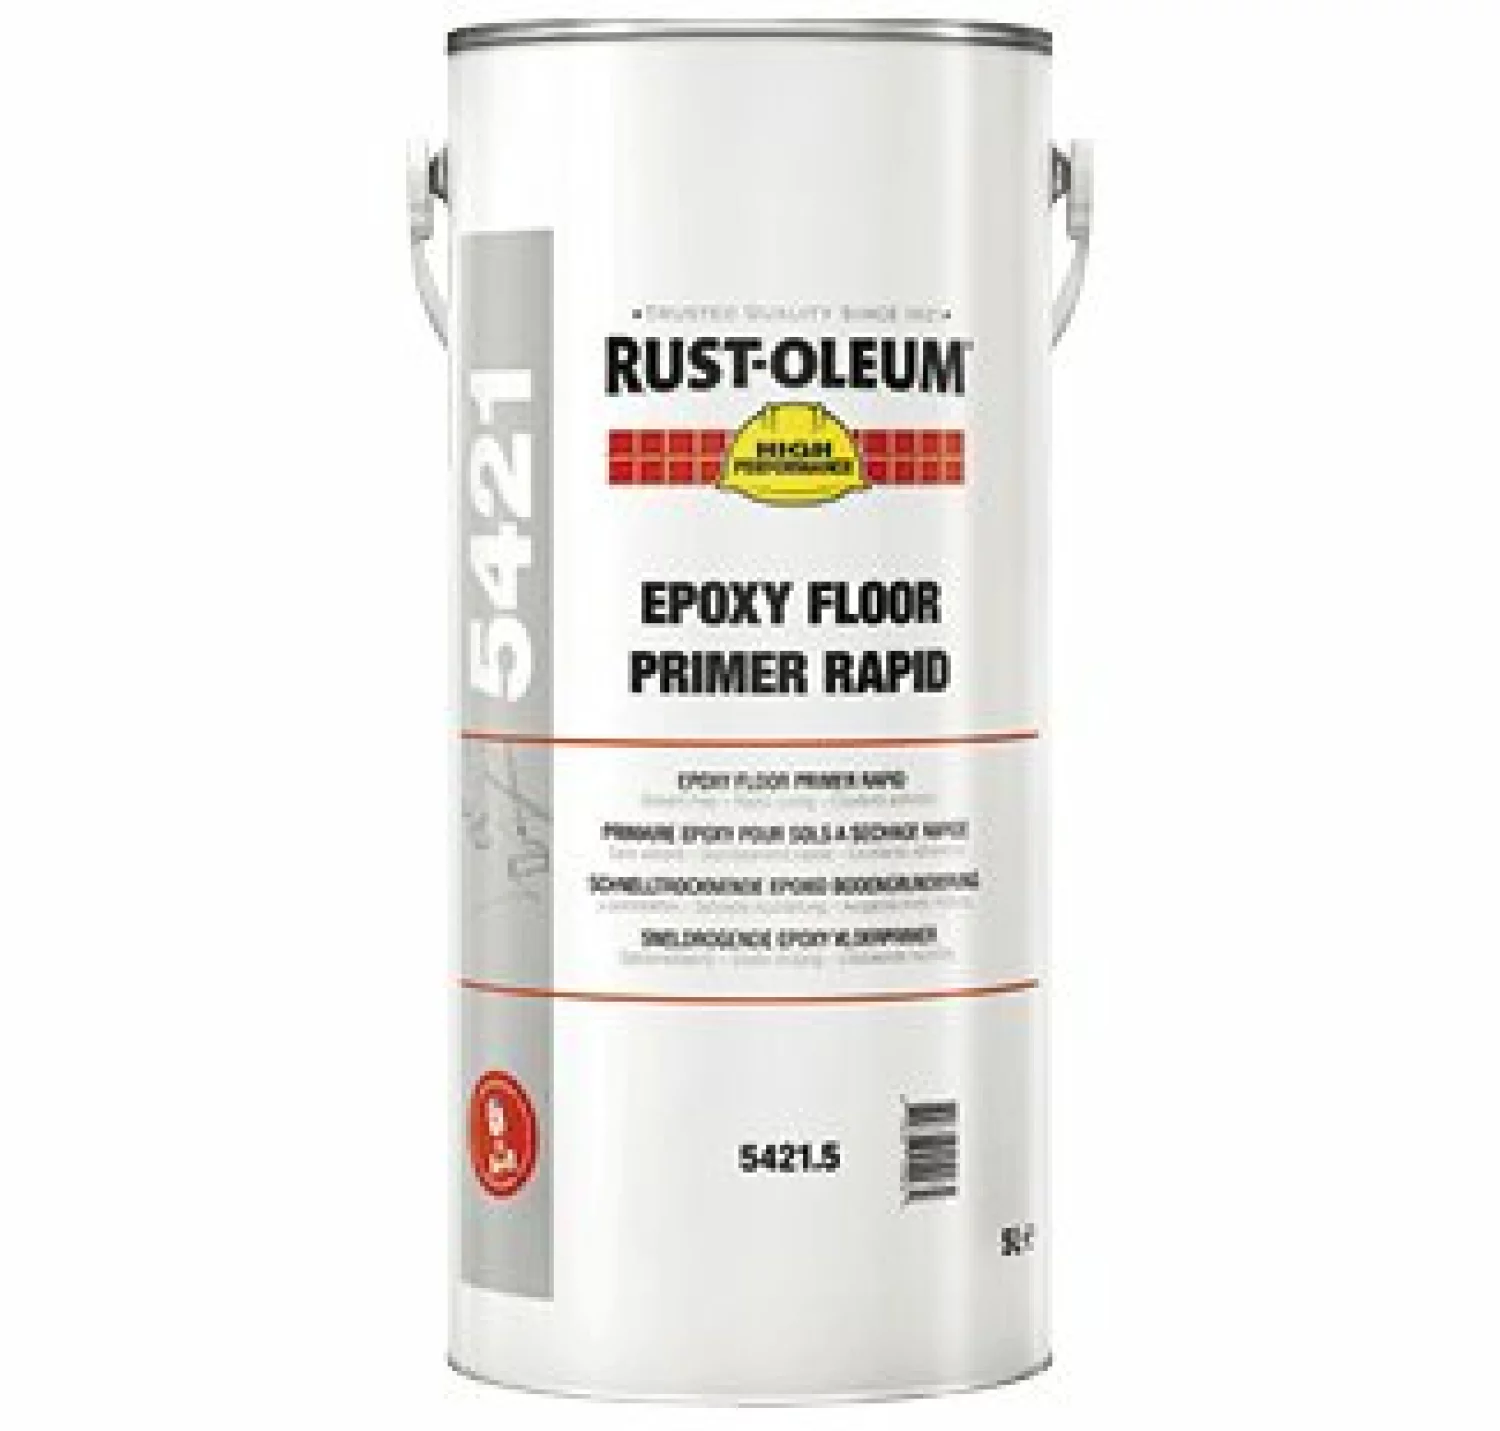 Rust-Oleum 5421 Epoxy Floor Primer Rapid 5 L-image